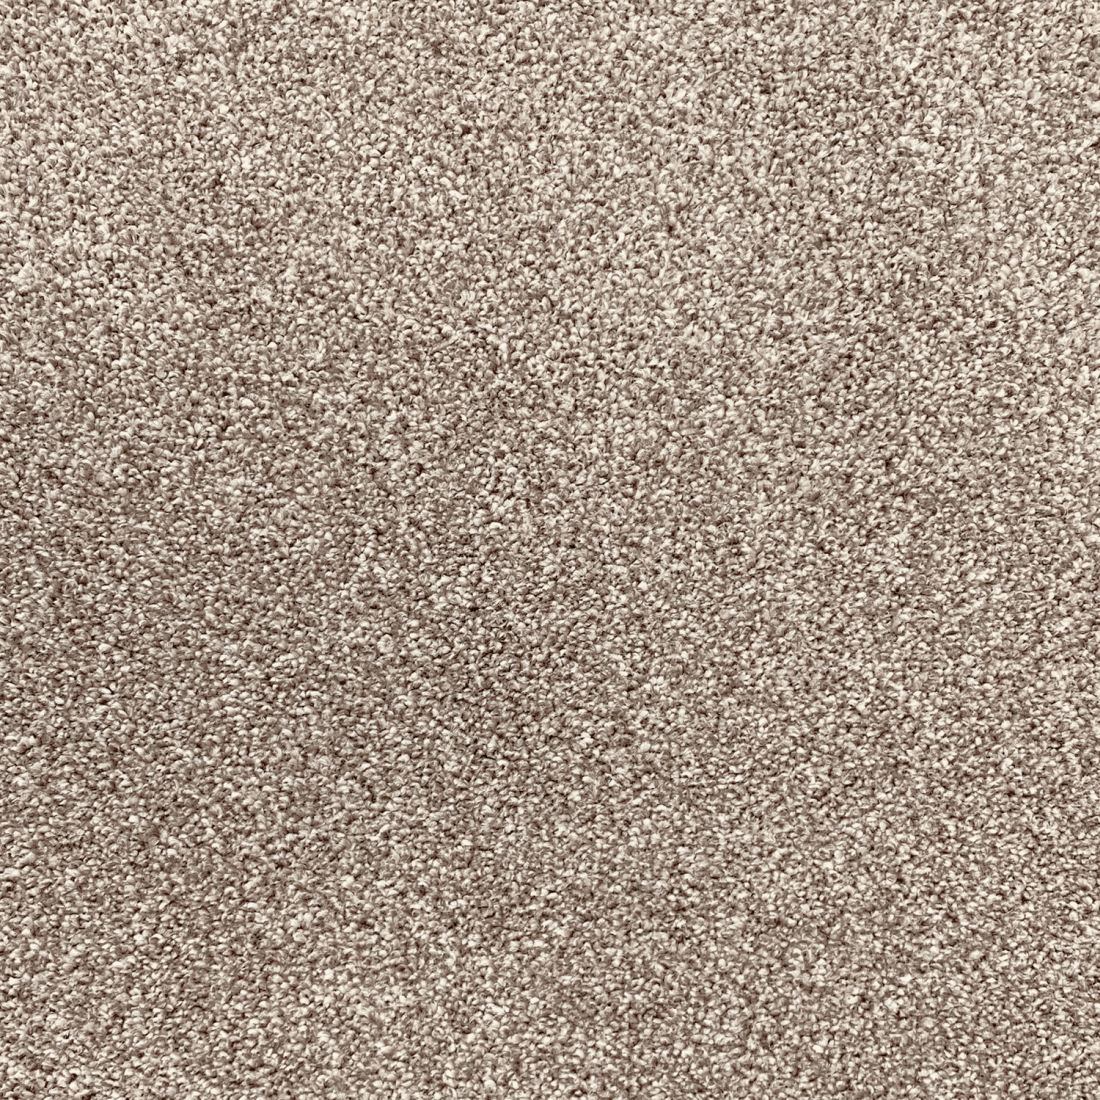 Invincible Rustic Stain Resistant Twist Carpet - Cappuccino